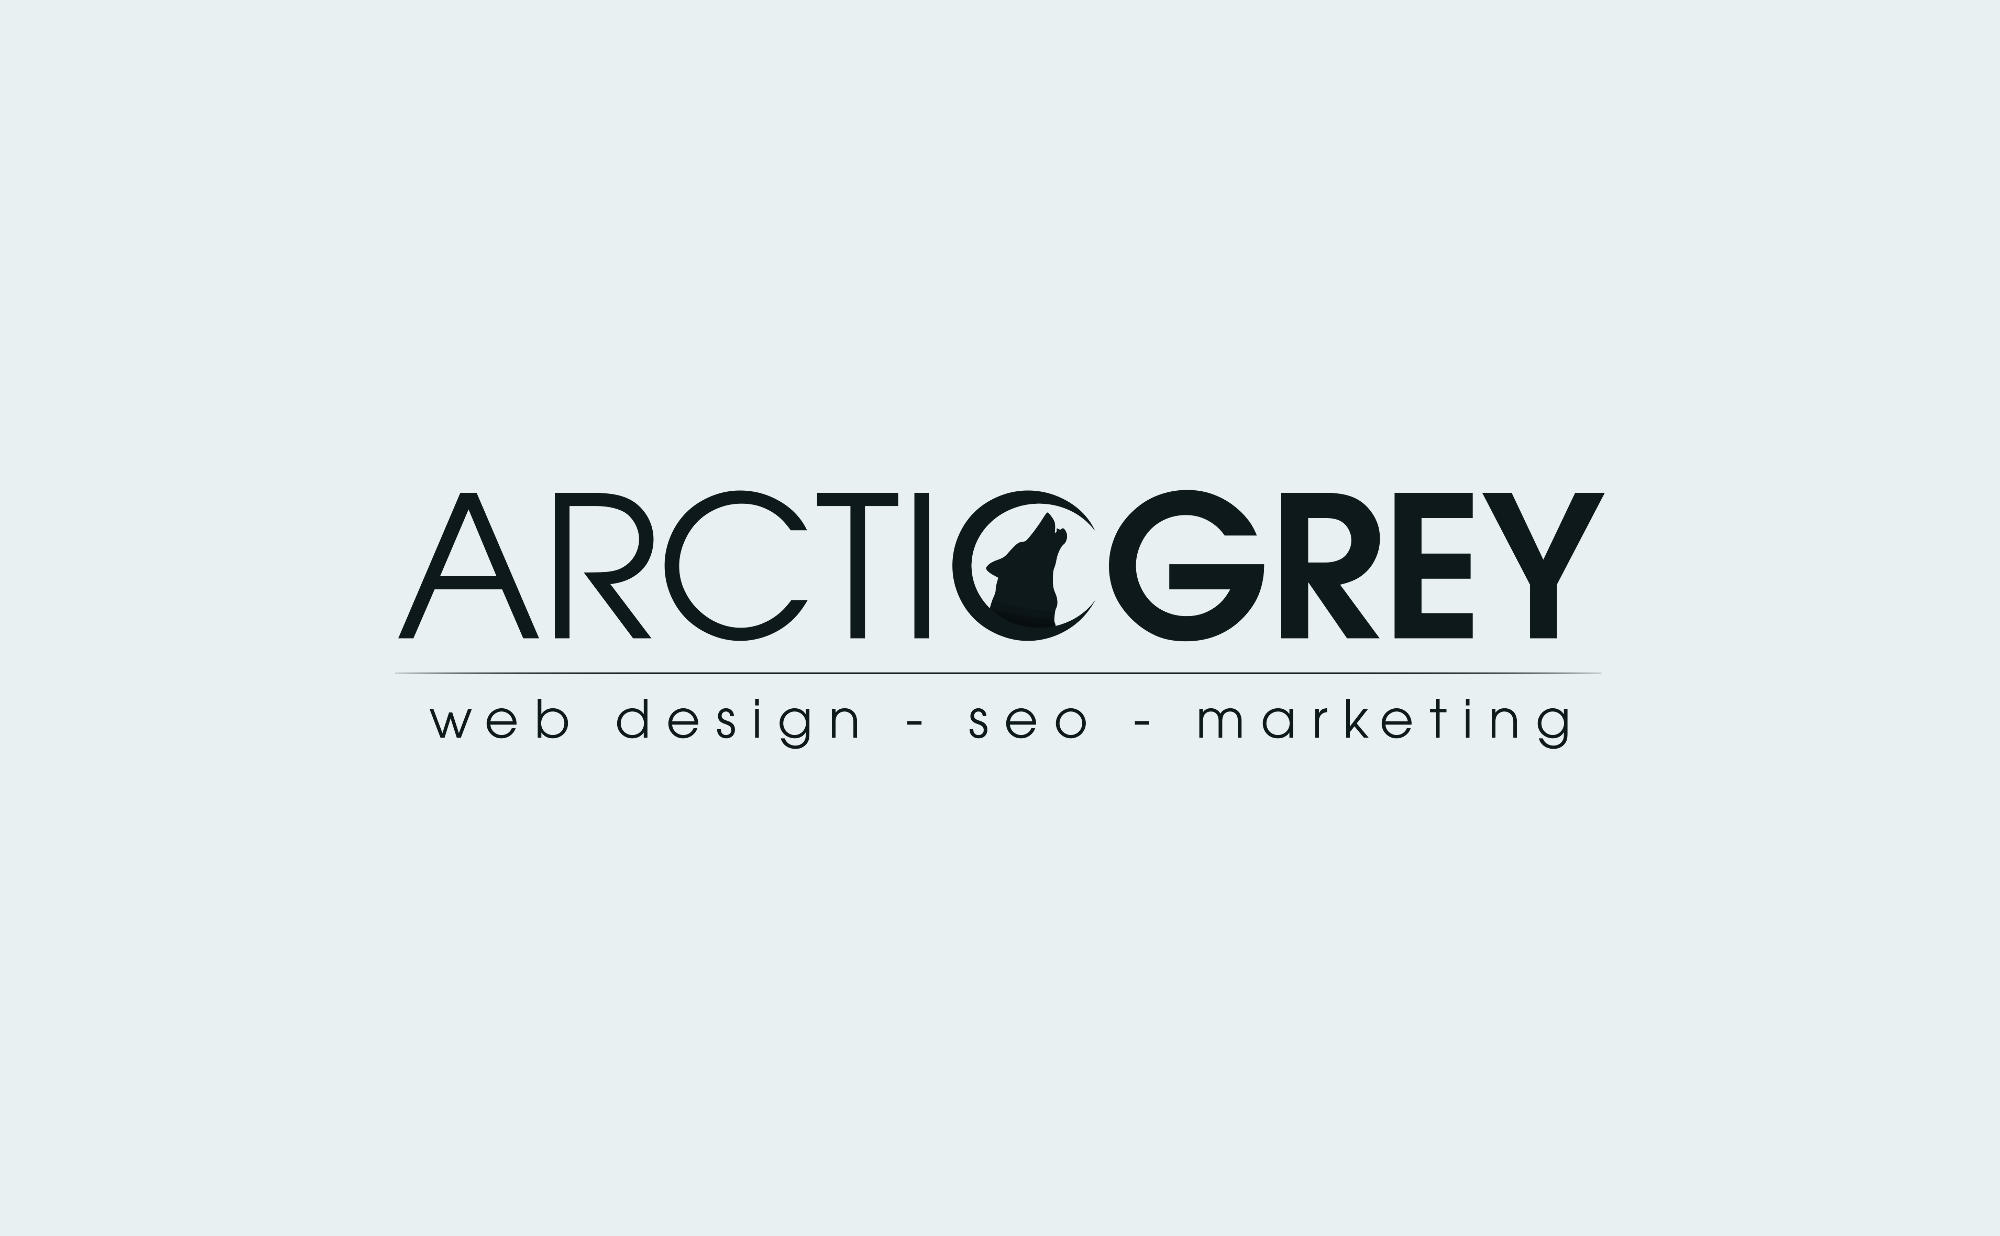 Top SEO Website Design Business Logo: Arctic Grey Inc